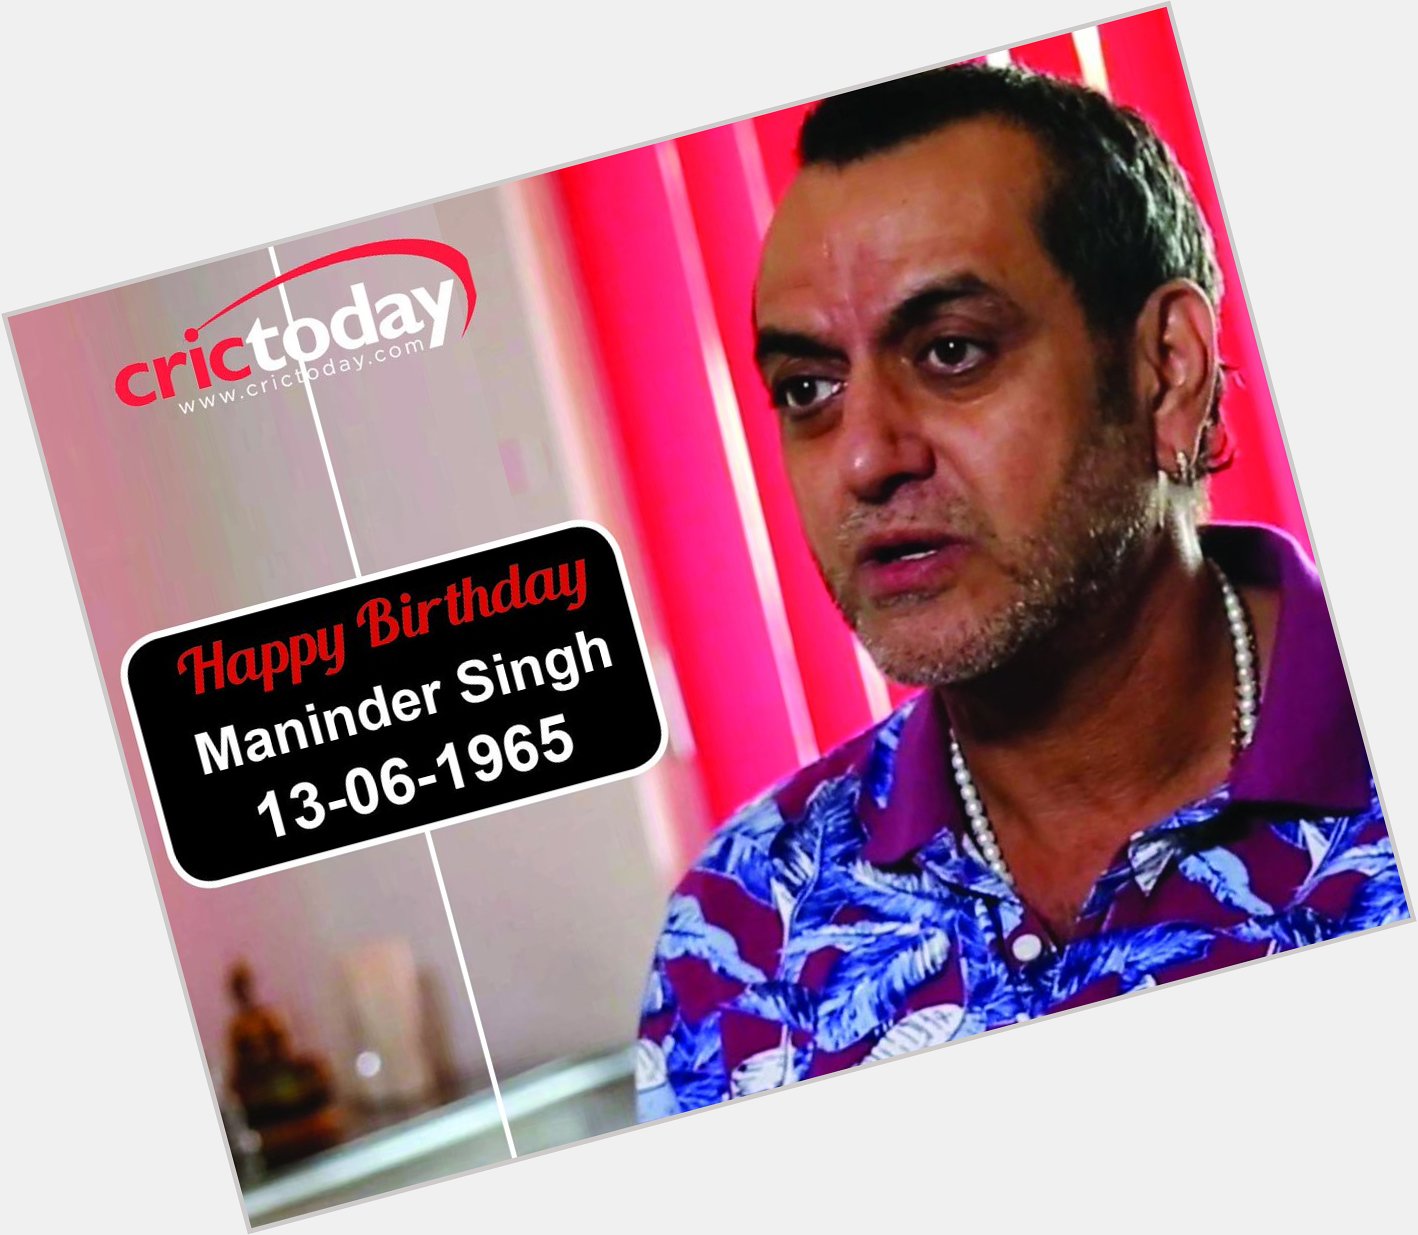  Happy Birthday Maninder Singh 